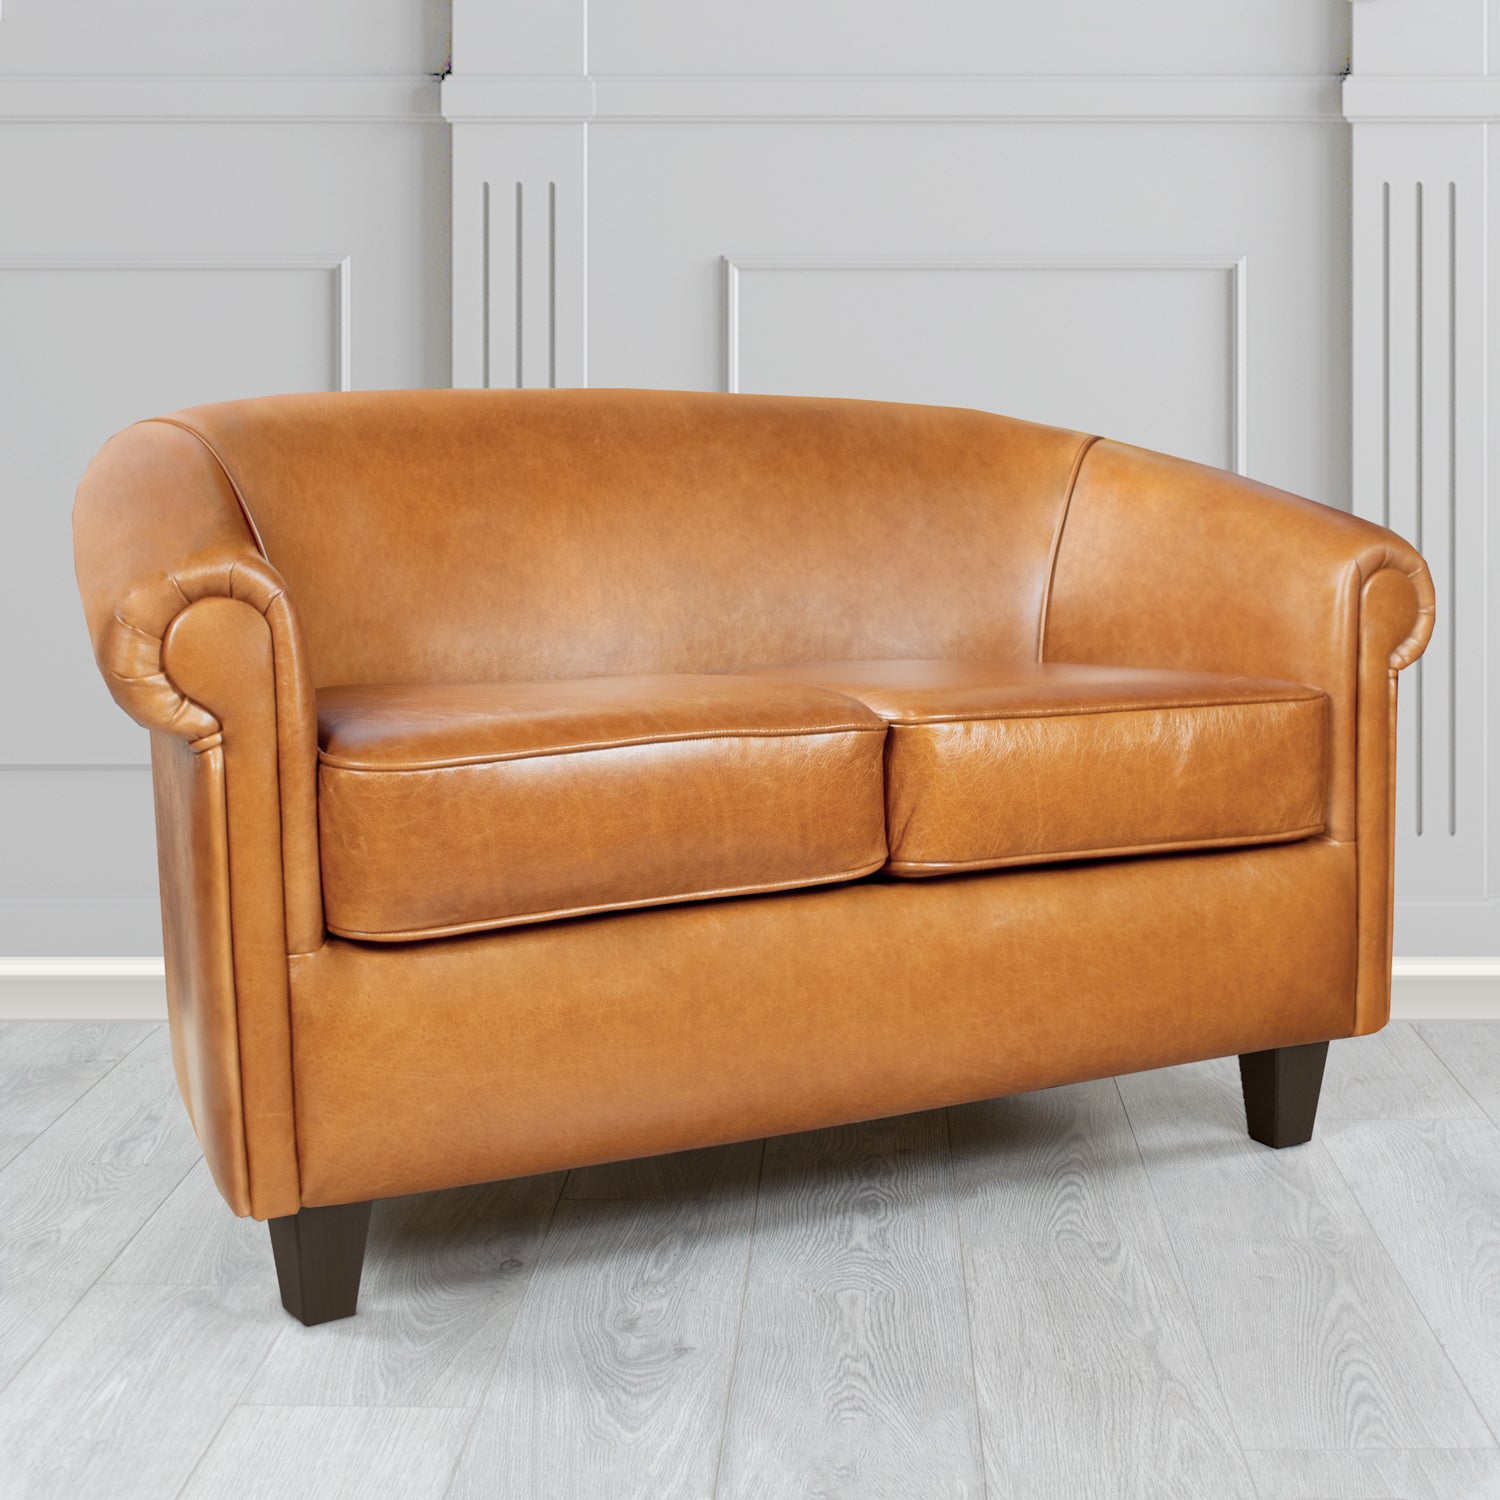 Siena 2 Seater Tub Sofa in Crib 5 Old English Buckskin Genuine Leather - The Tub Chair Shop